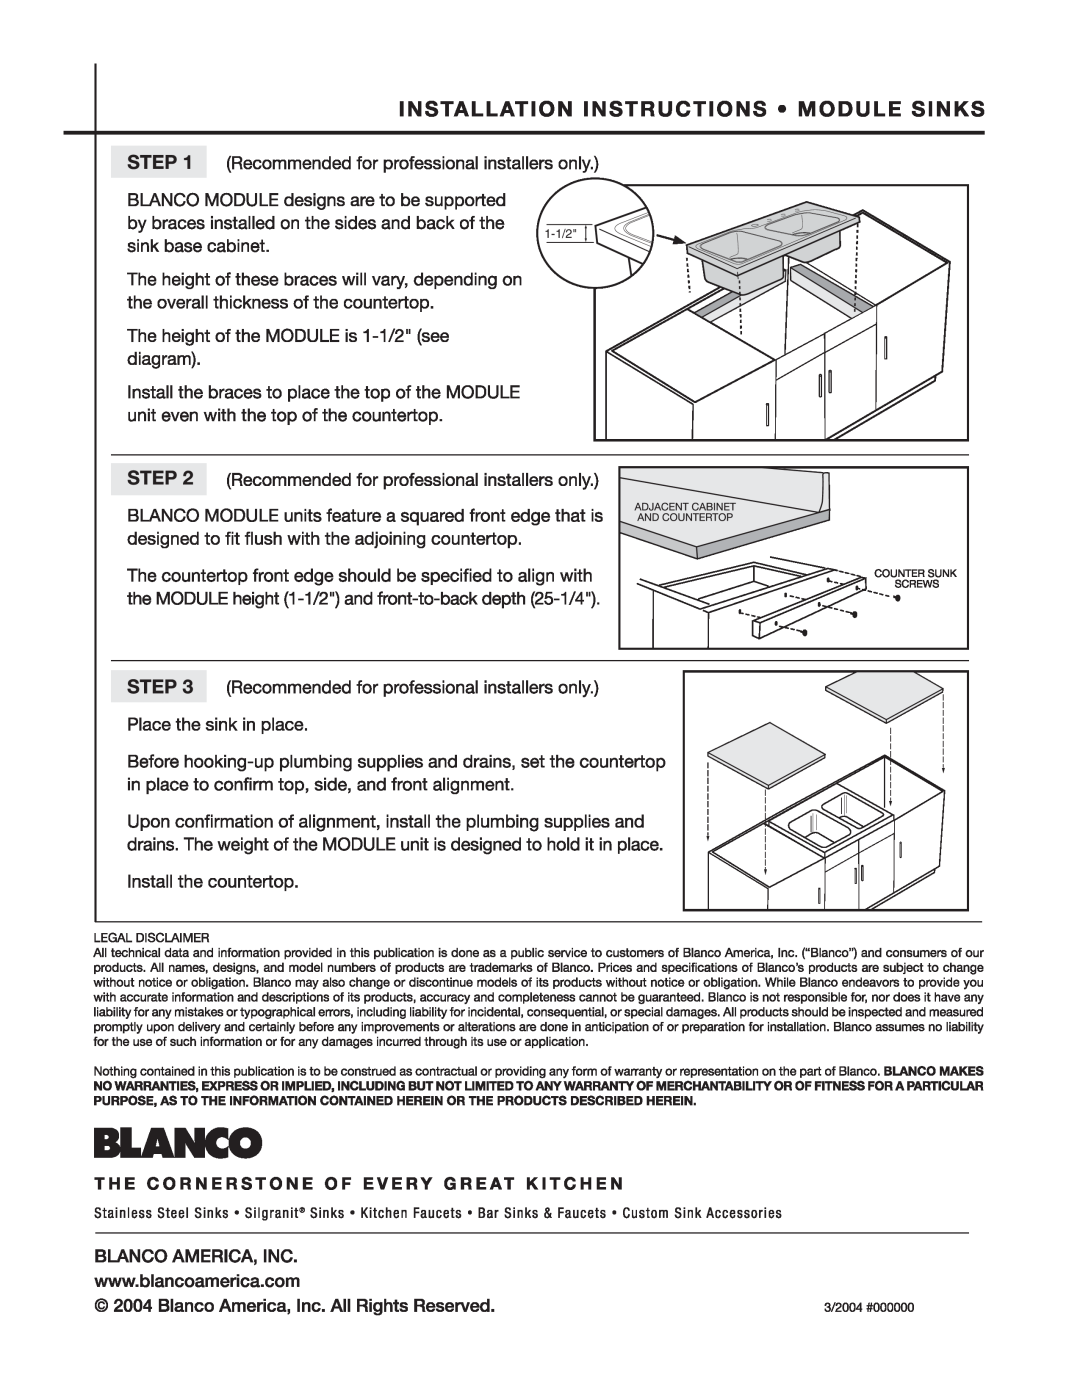 Blanco Sink manual 